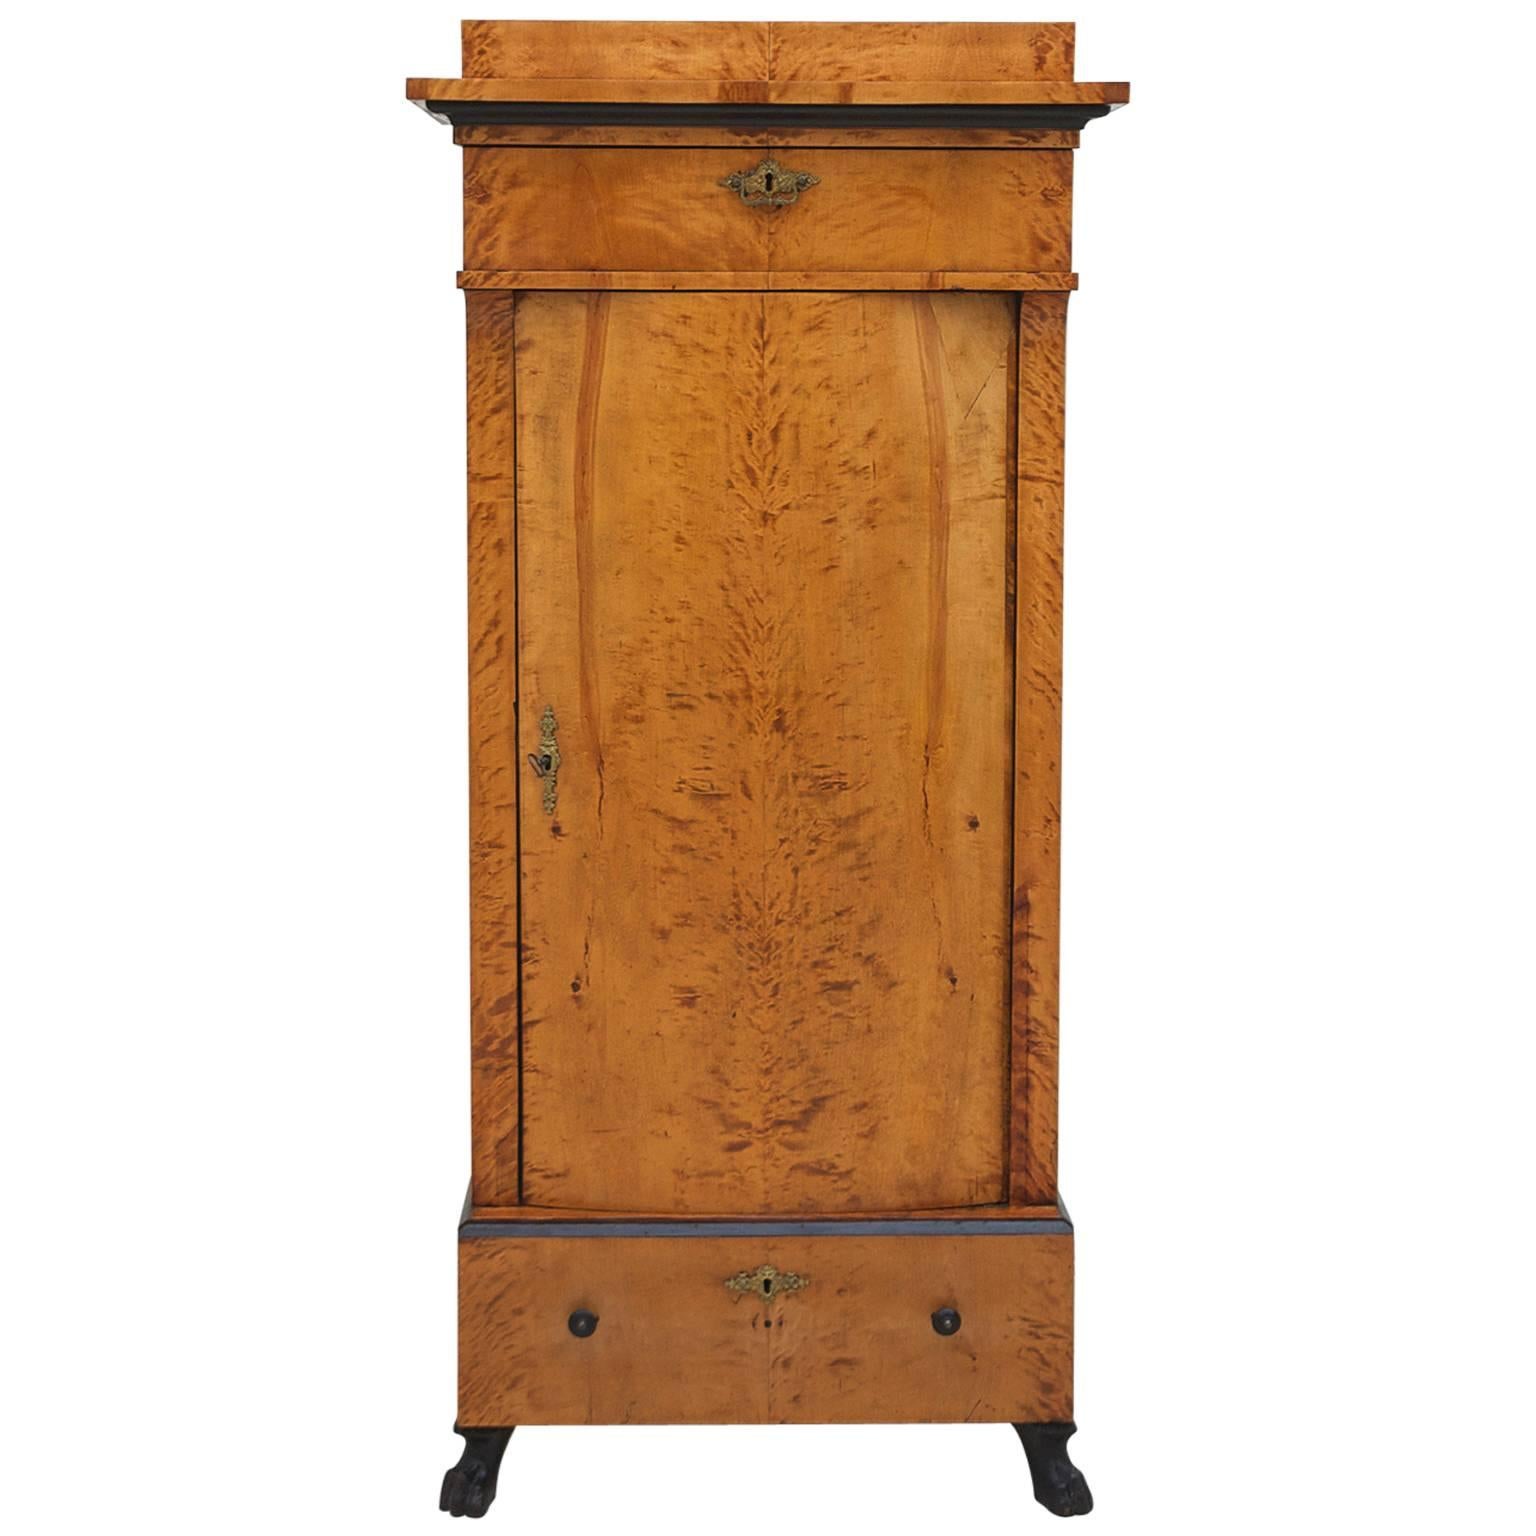 Antique Swedish Empire Pedestal Cabinet in Polished Birch, circa 1810